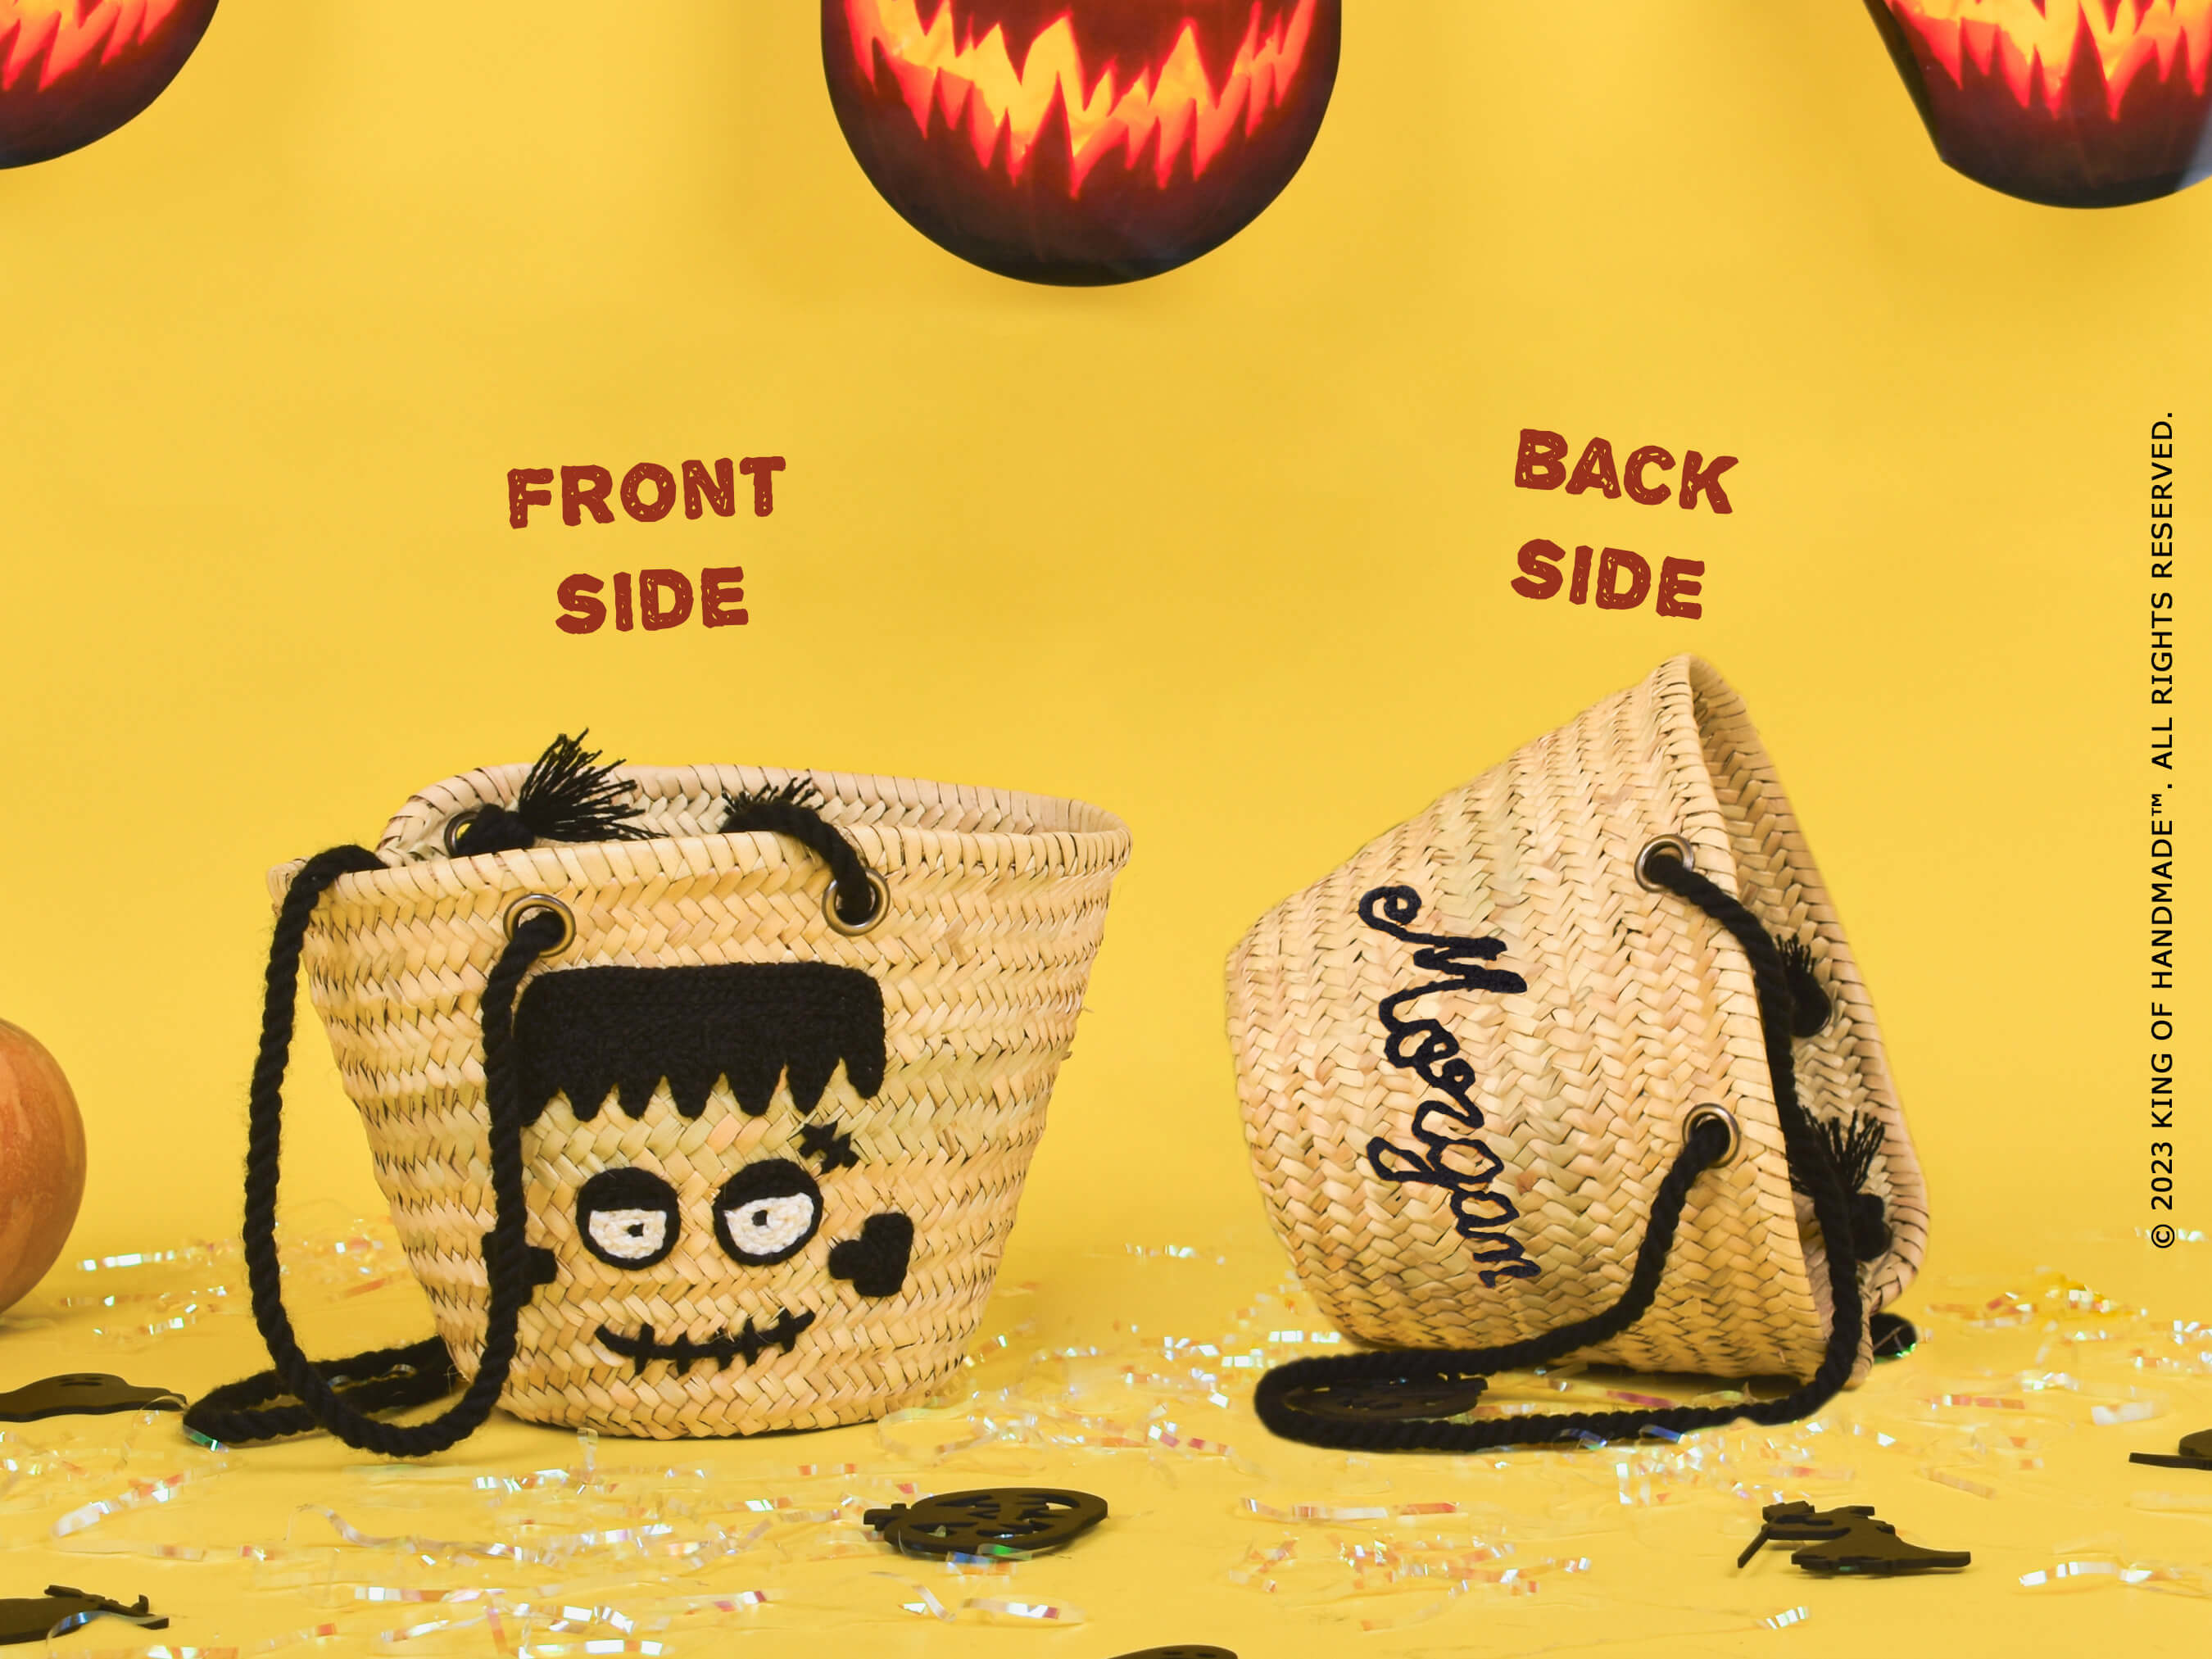 Halloween bucket - Diego Bat Skeleton basket